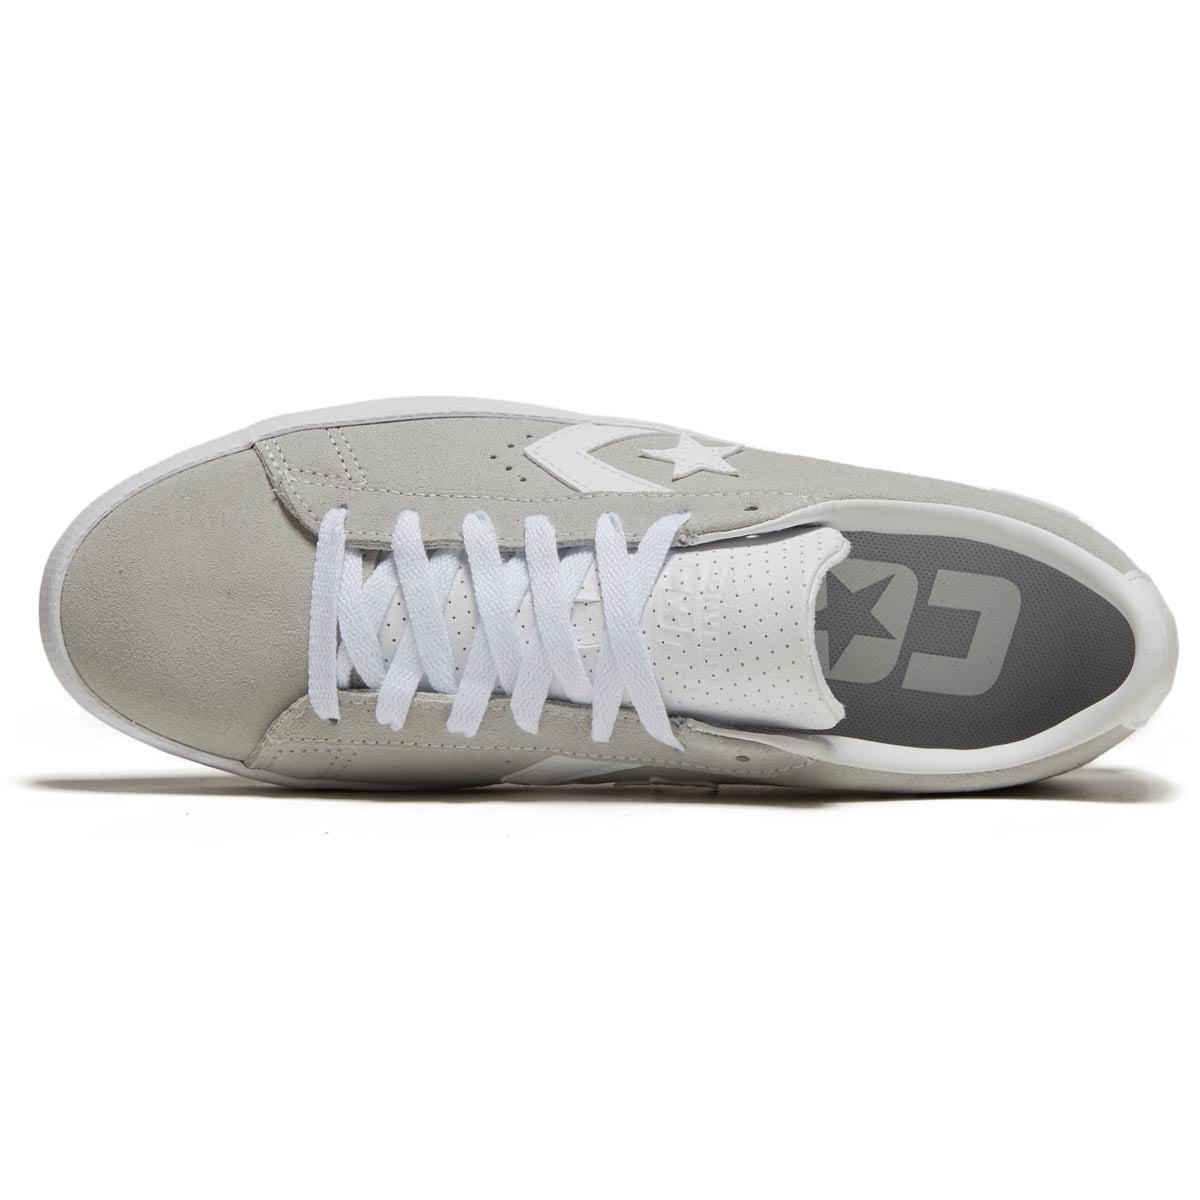 Converse Pl Vulc Pro Shoes - Fossilized/White/White image 3